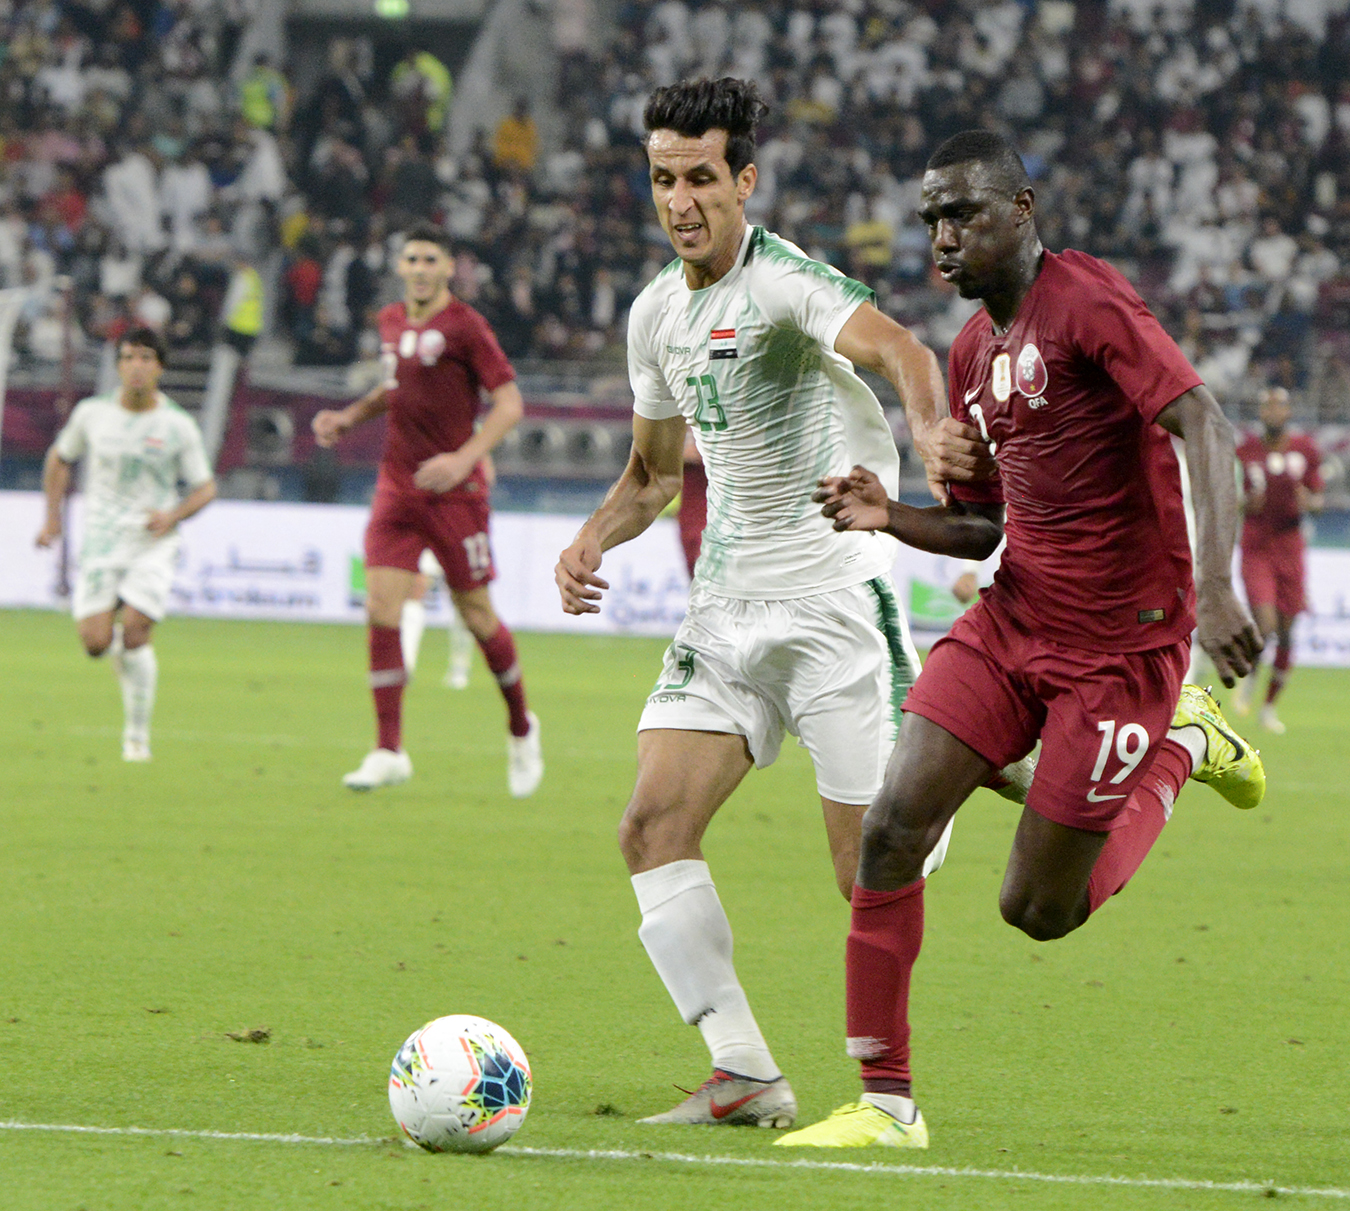 The football match between Iraq and Qatar